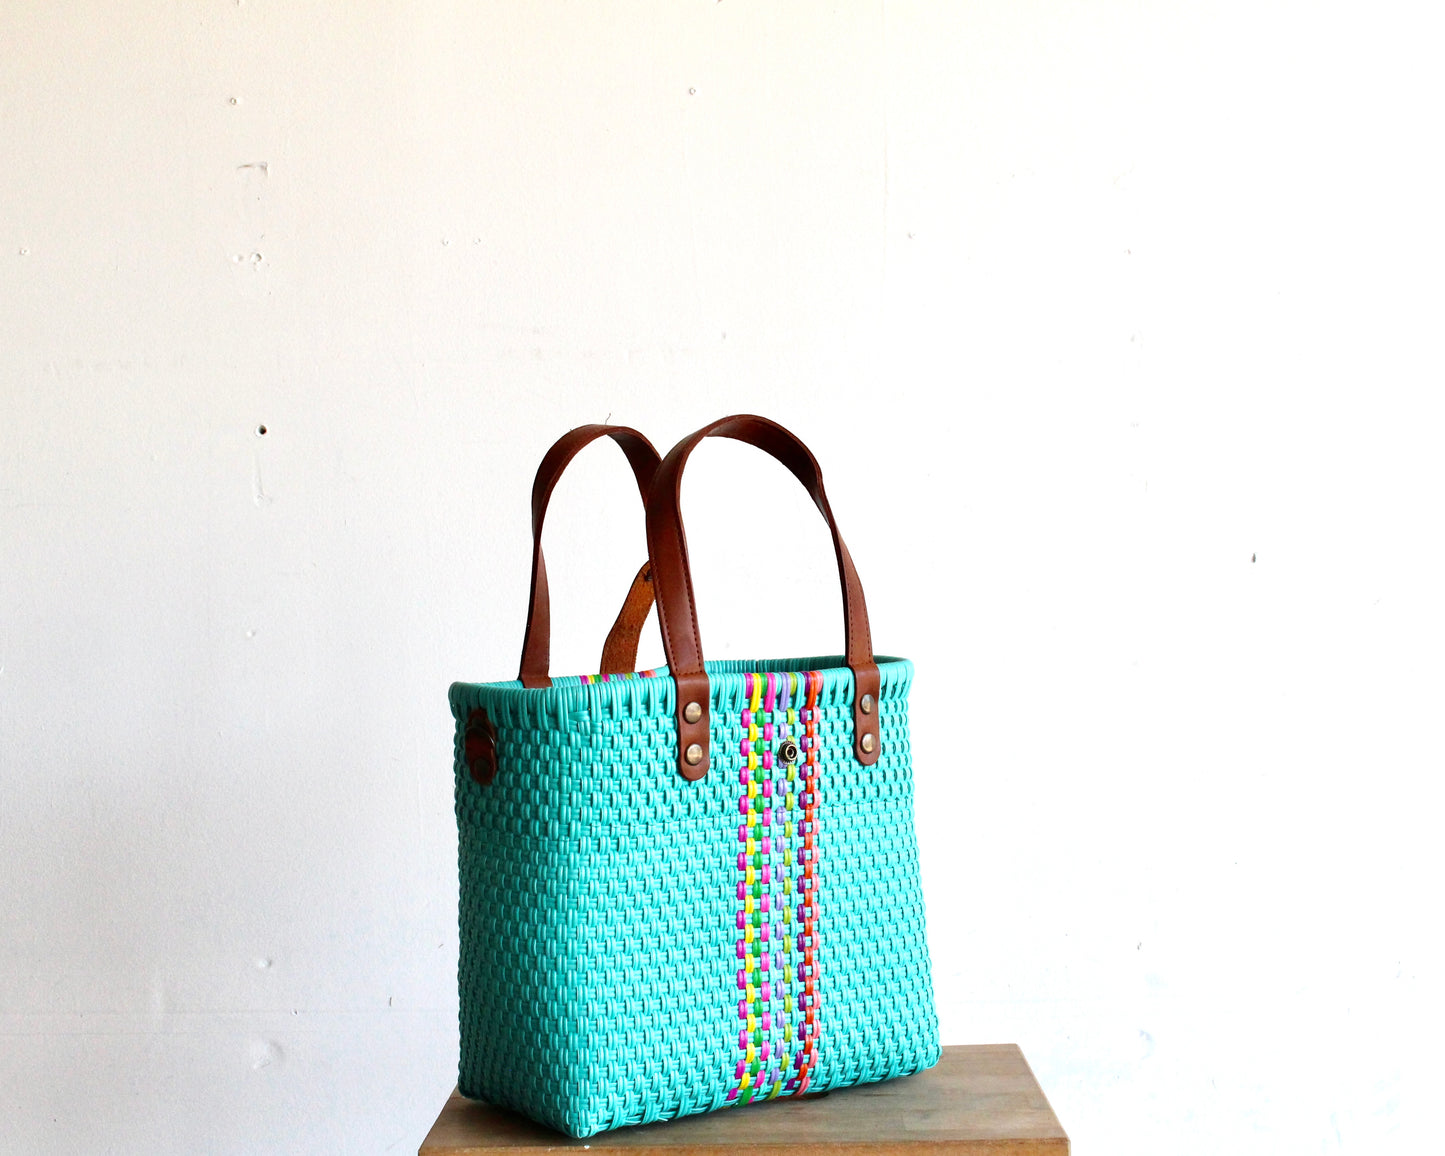 Aqua with Colors Purse bag by MexiMexi